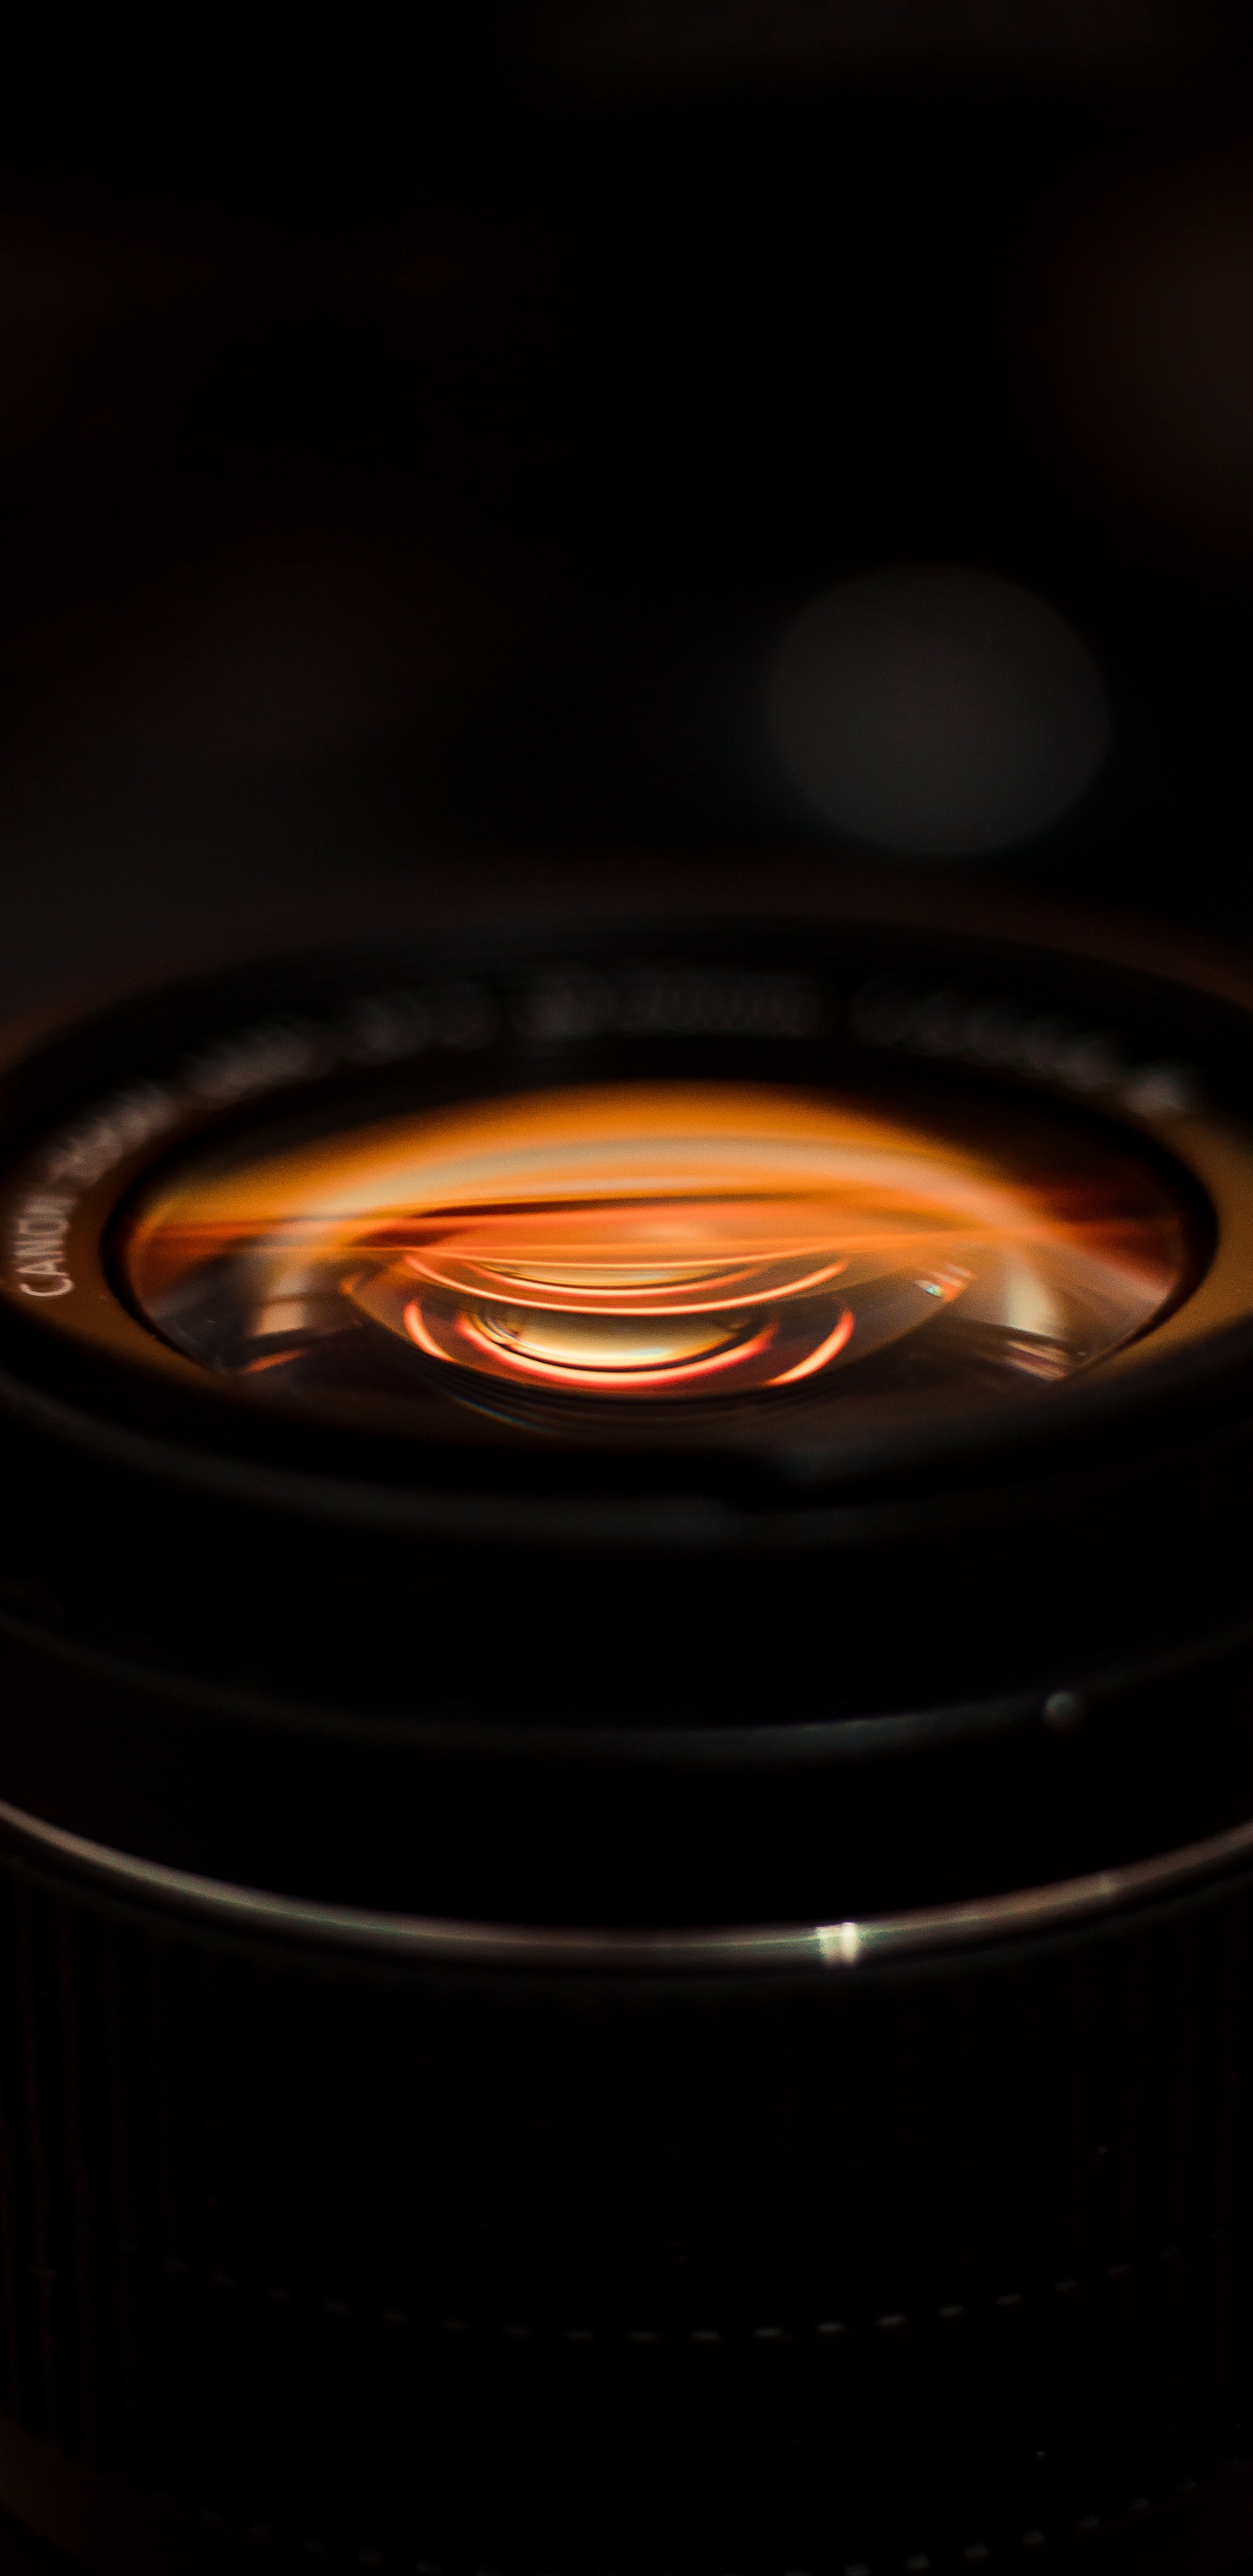 Black Camera Lens With Orange Light. Wallpaper in 1440x2960 Resolution